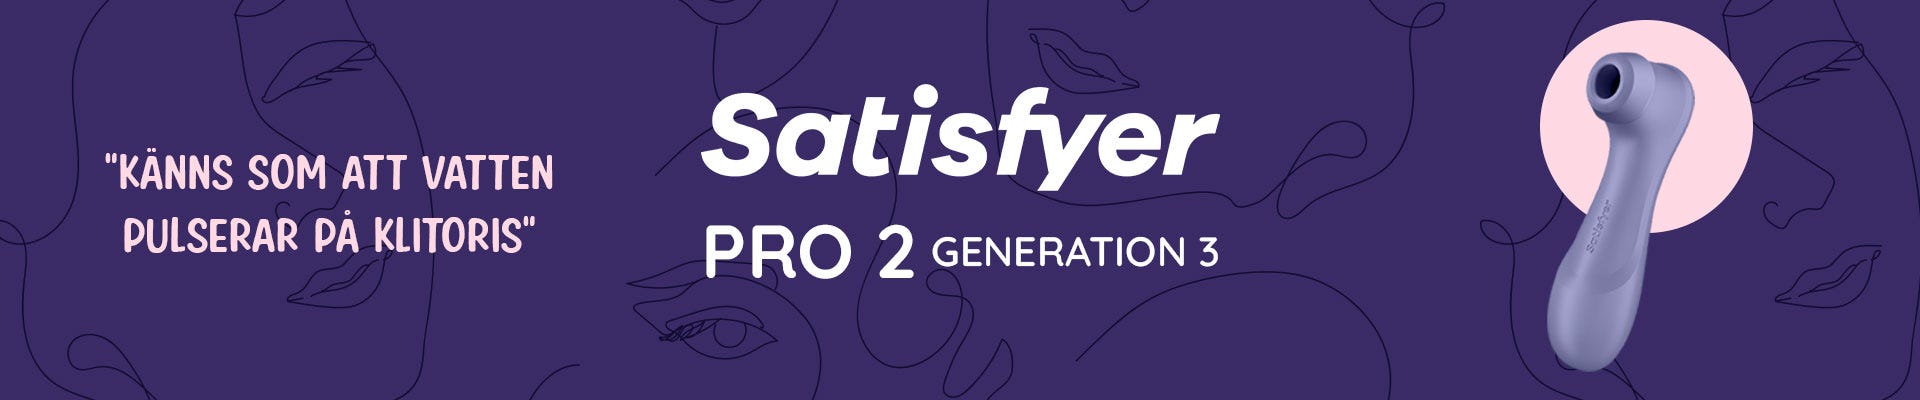 Satisfyer Pro 2 Generation 3 